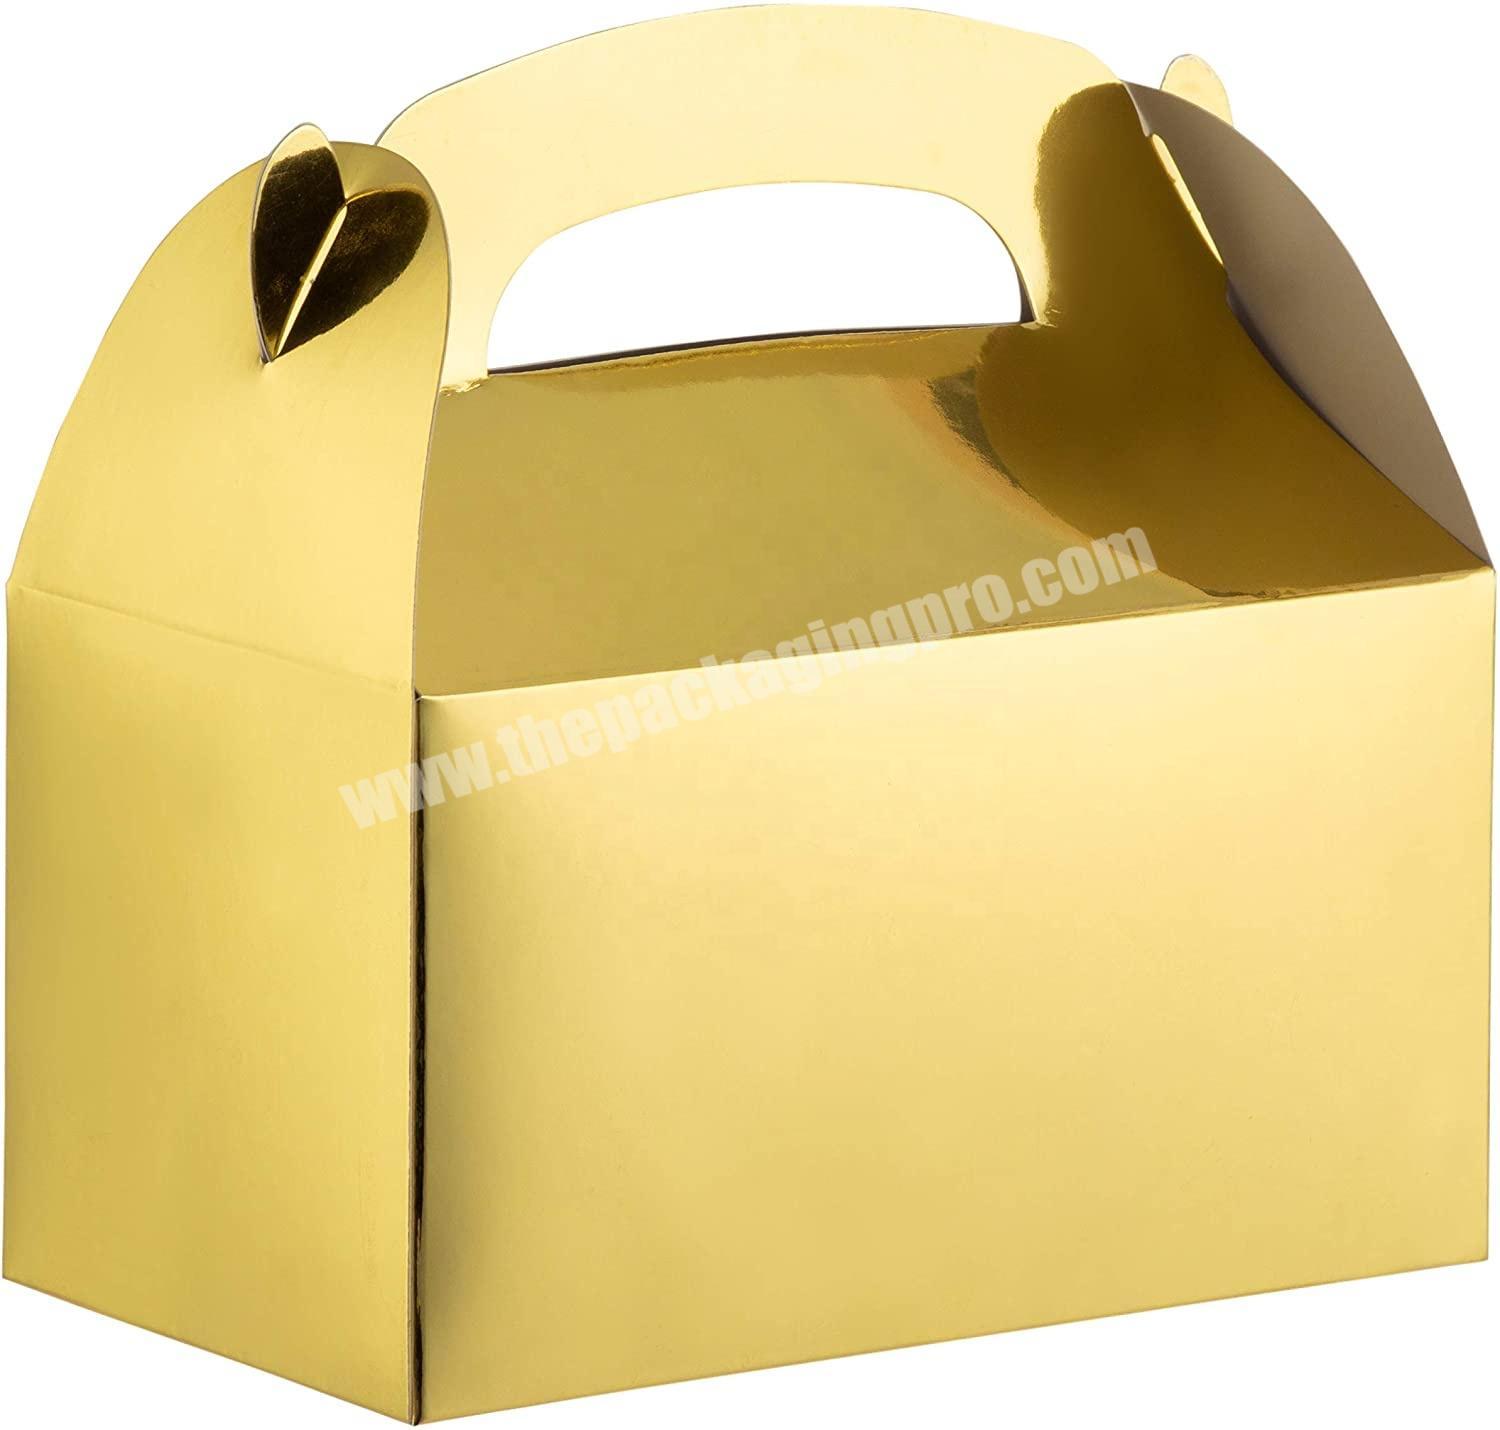 Metallic Gold Foil Gable Gift Boxes for Party Wedding, Birthday